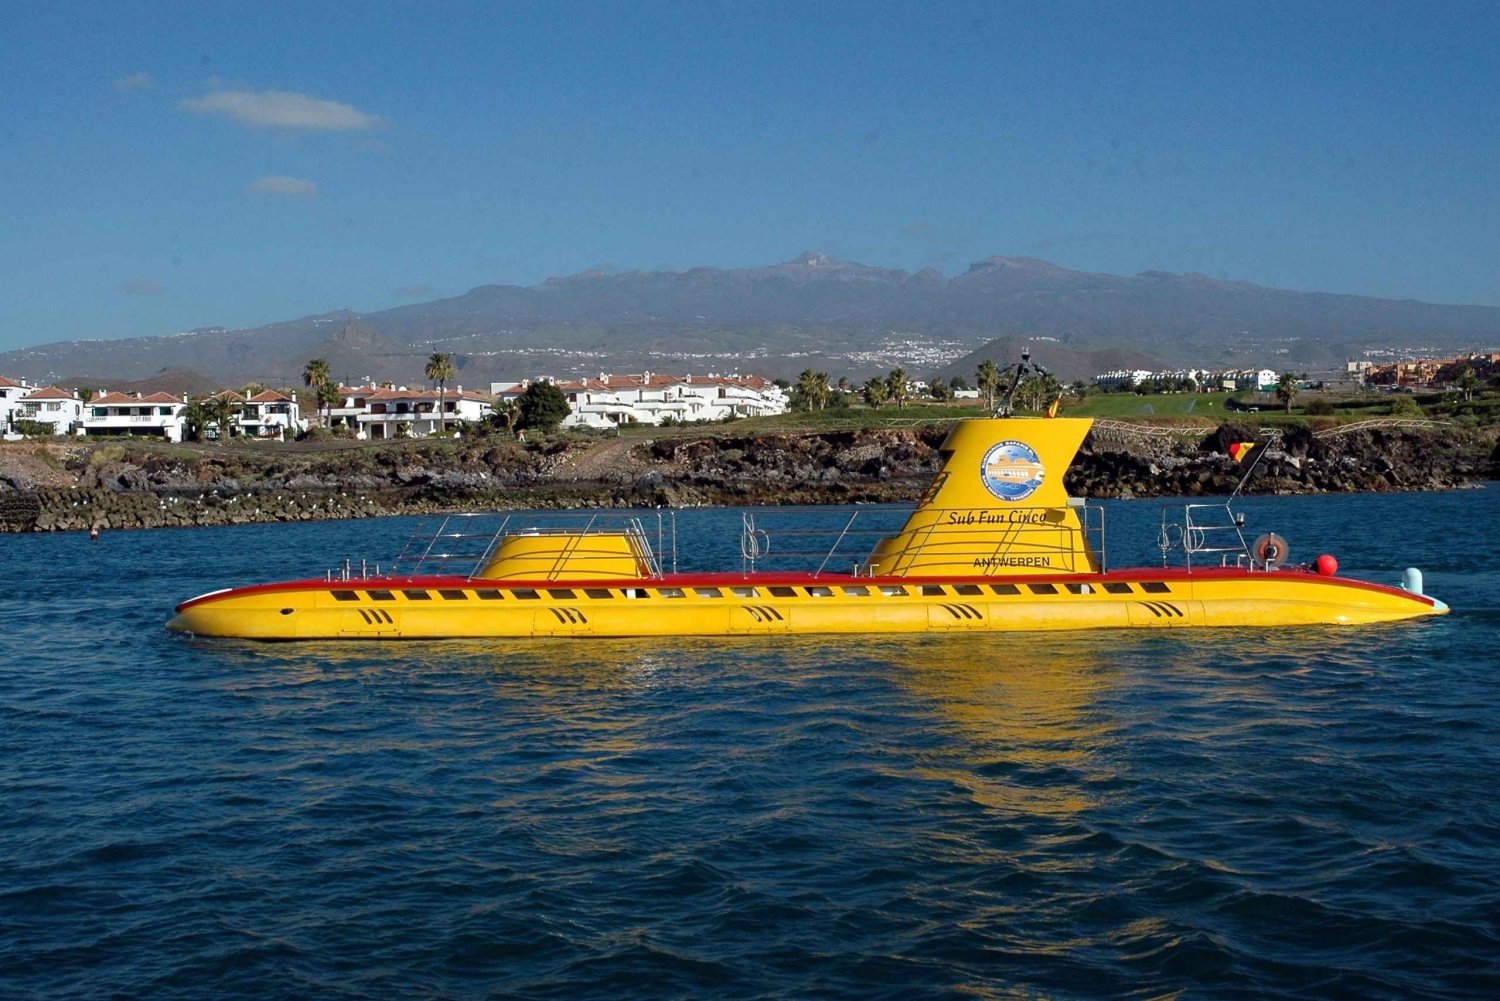 Puerto de la Cruz: Submarine Trip and Beach Stop in Tenerife